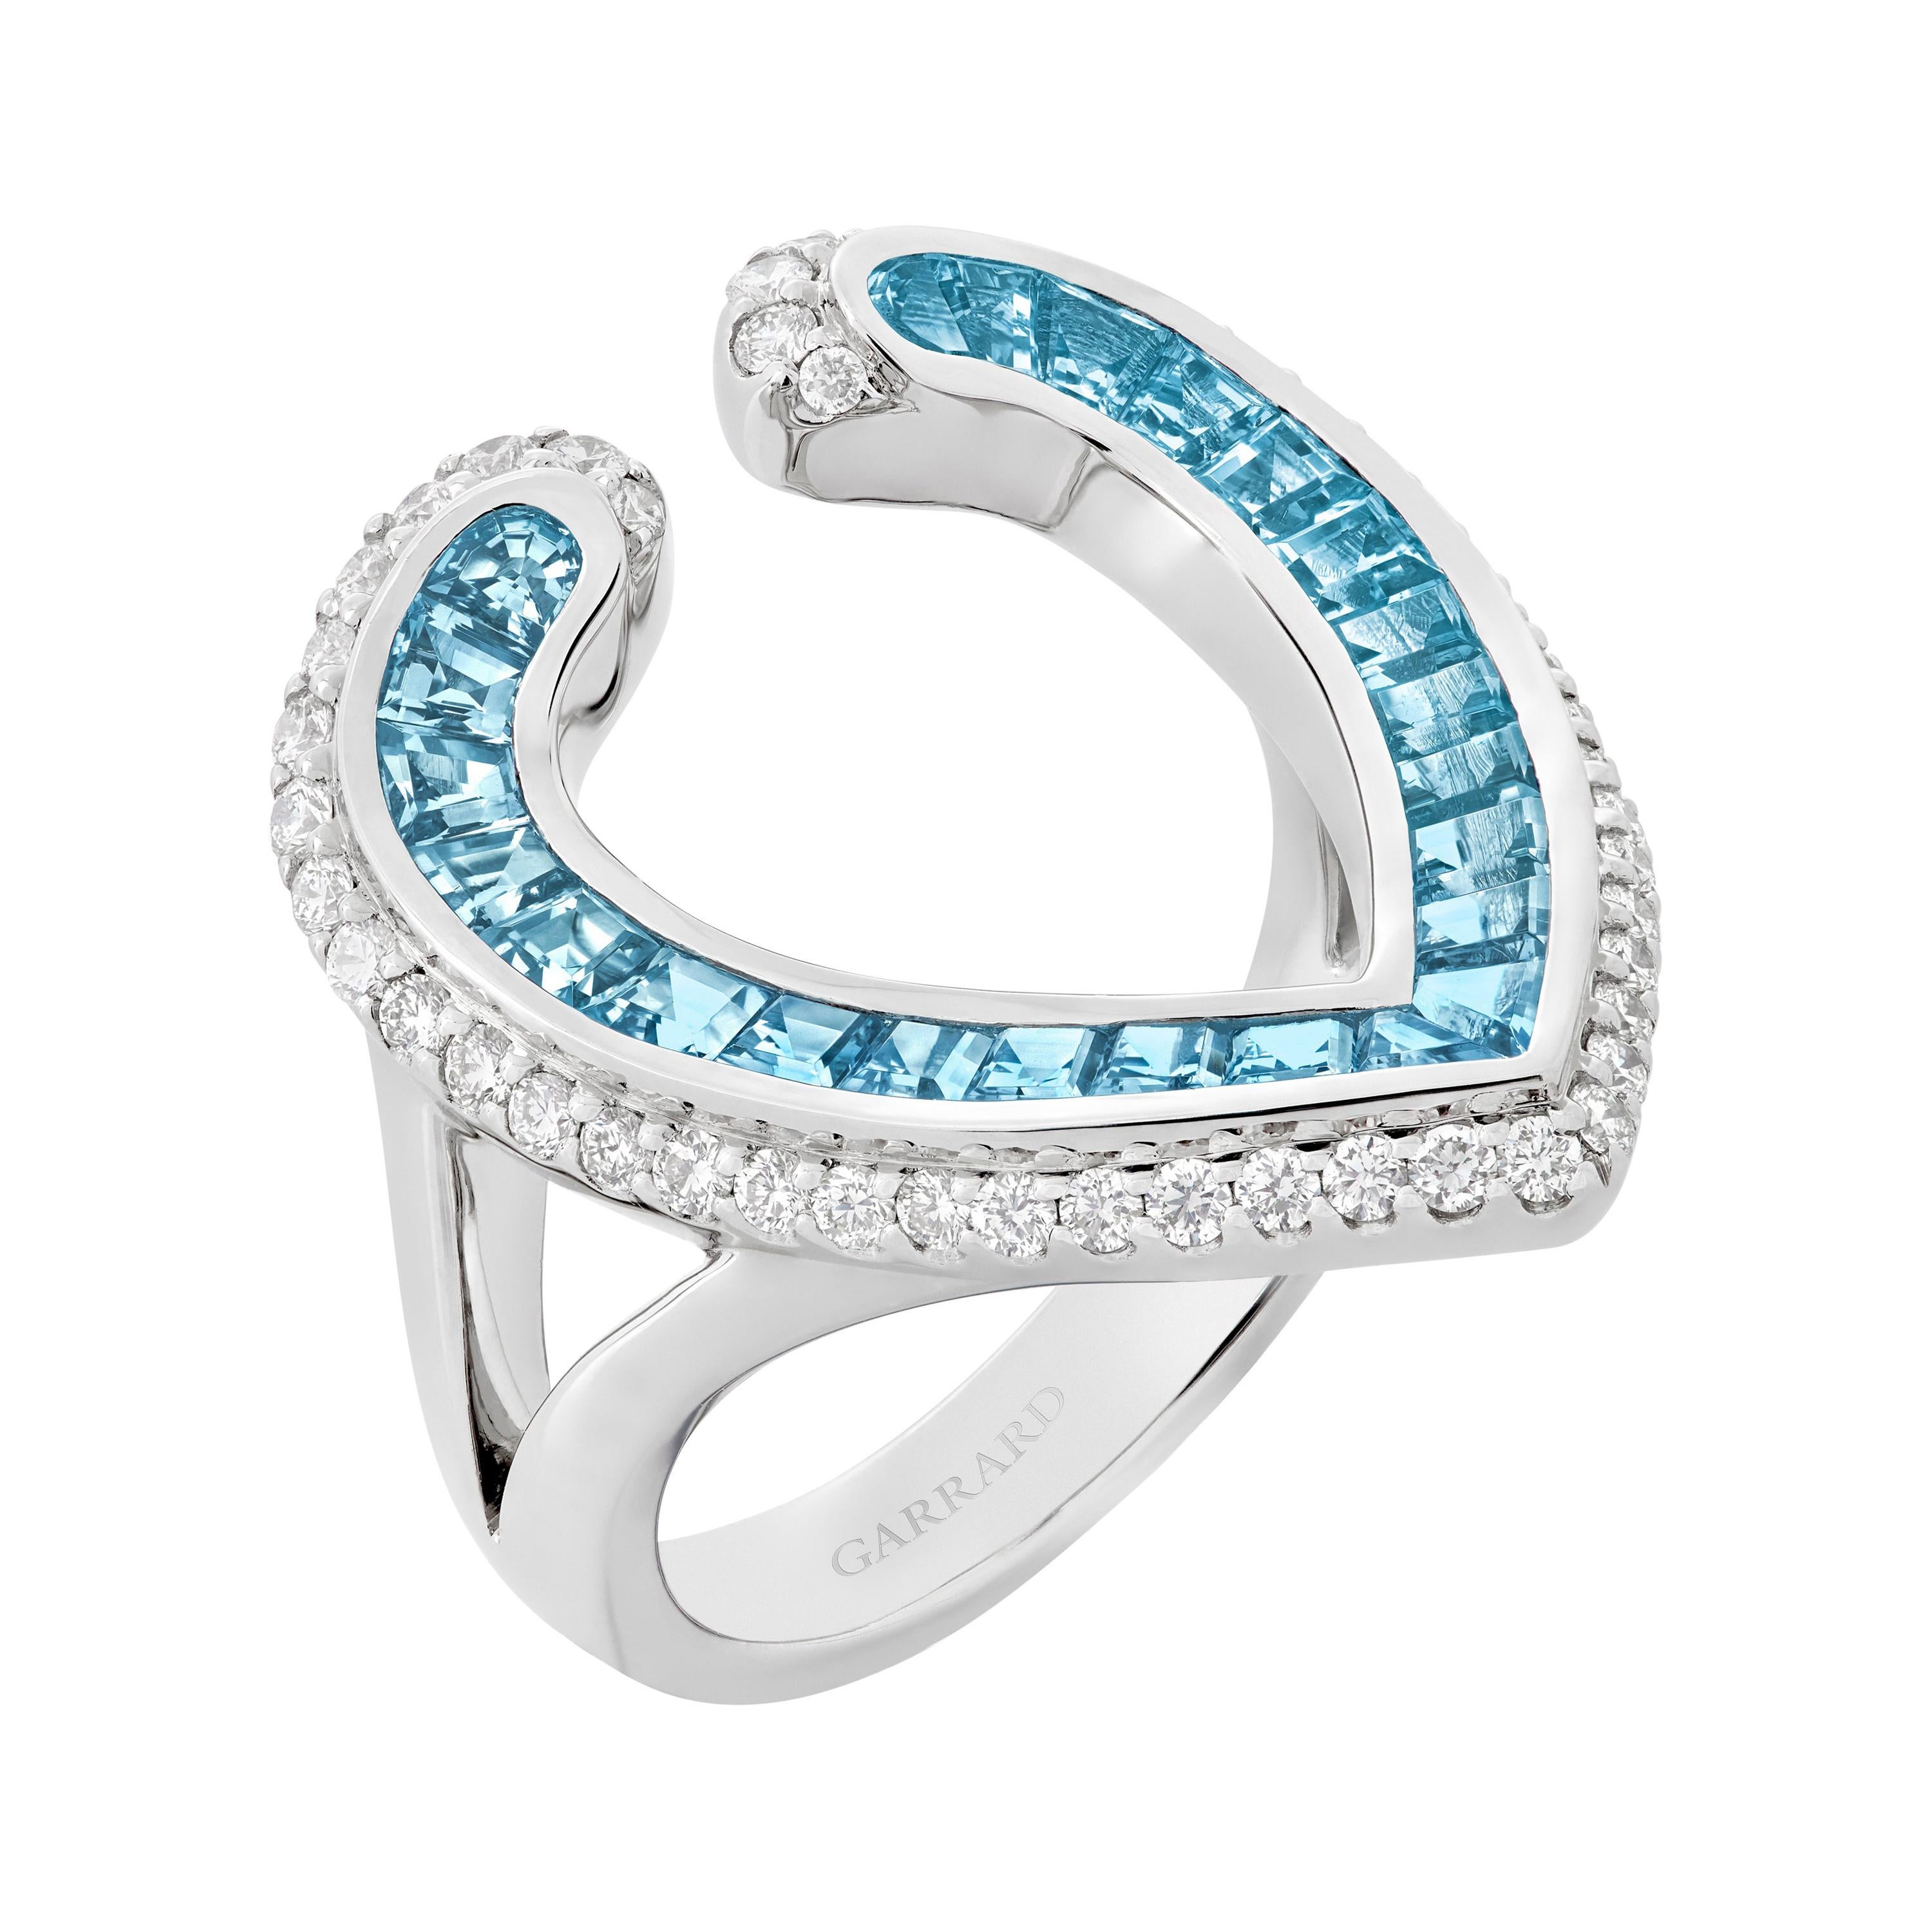 Garrard 'Aloria' 18 Karat White Gold Calibre Cut Aquamarine White Diamond Ring For Sale